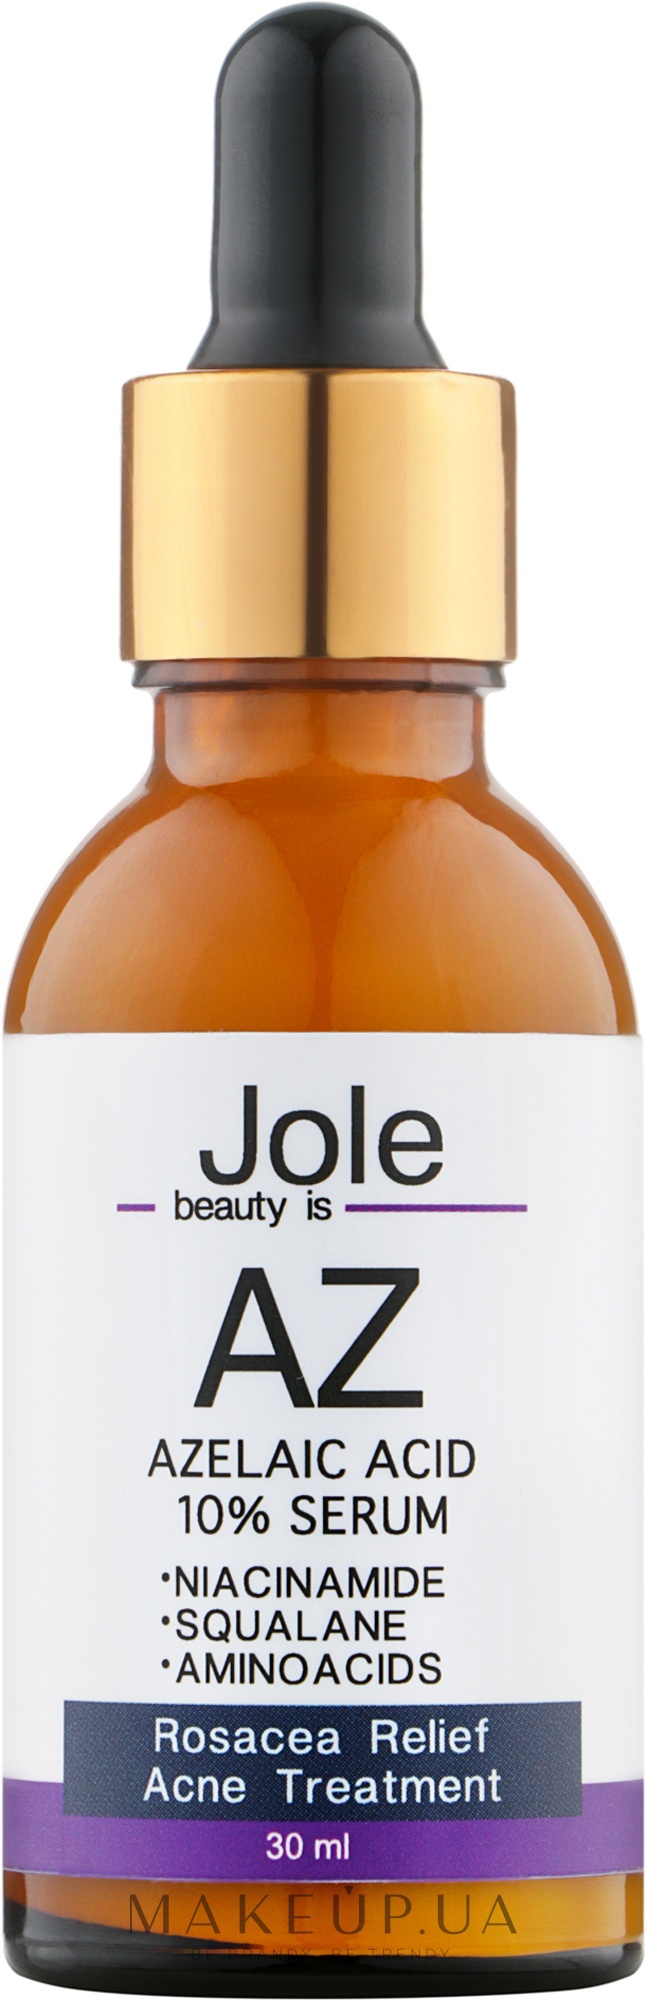 Jole Azelaic Acid 10% Serum